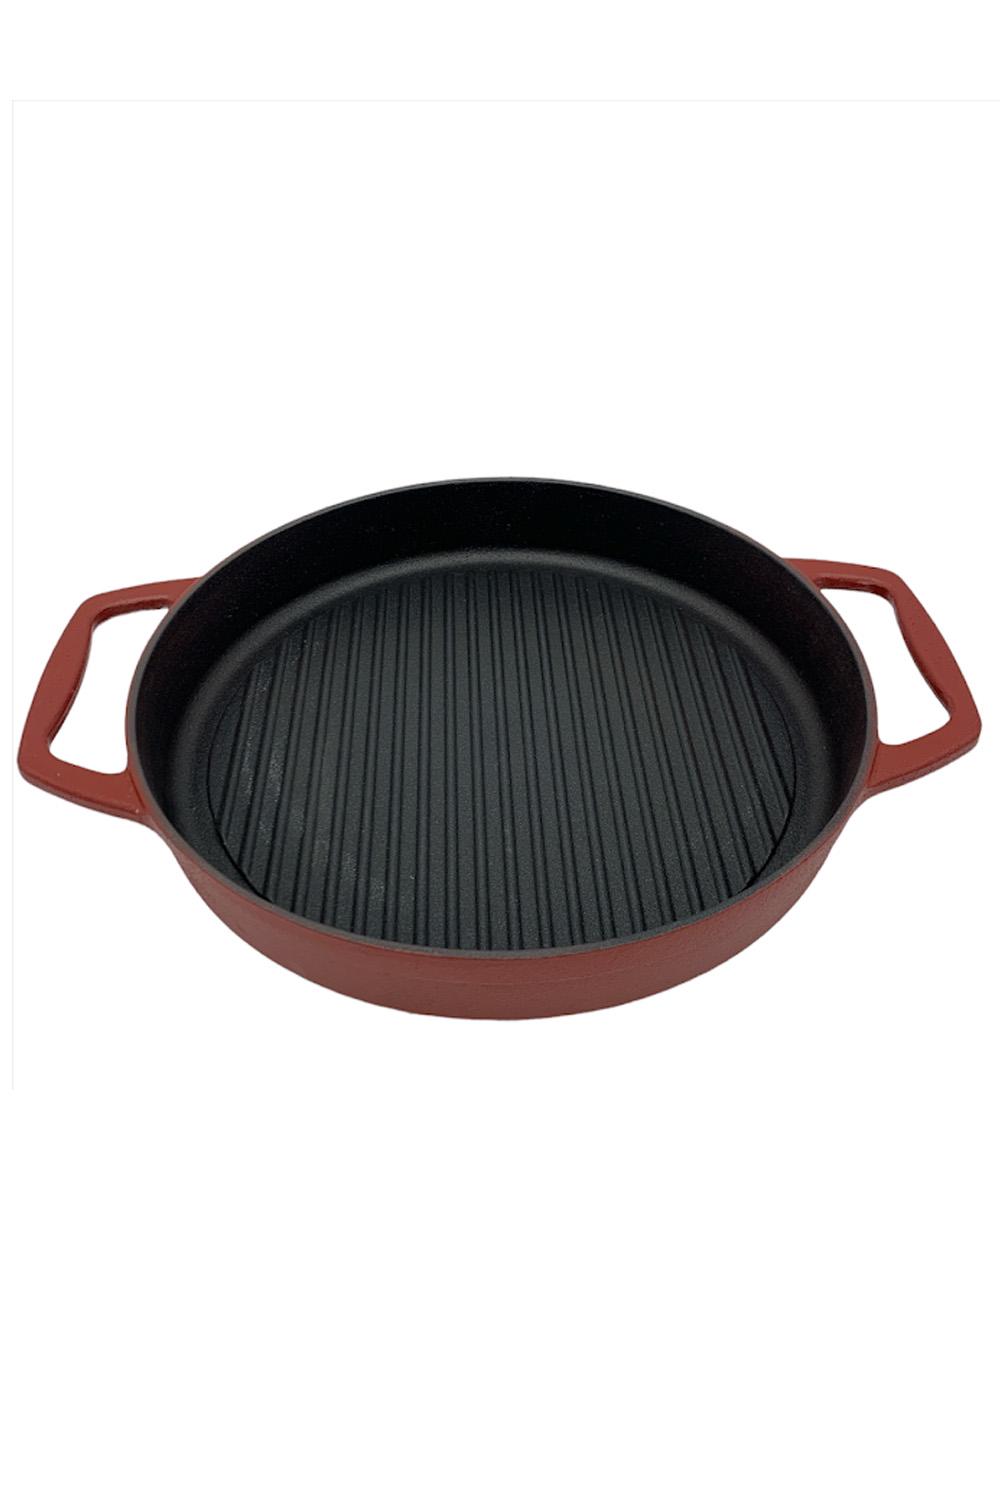 Chef Robert Irvine 3-Piece Ceramic Nonstick Cookware Set 